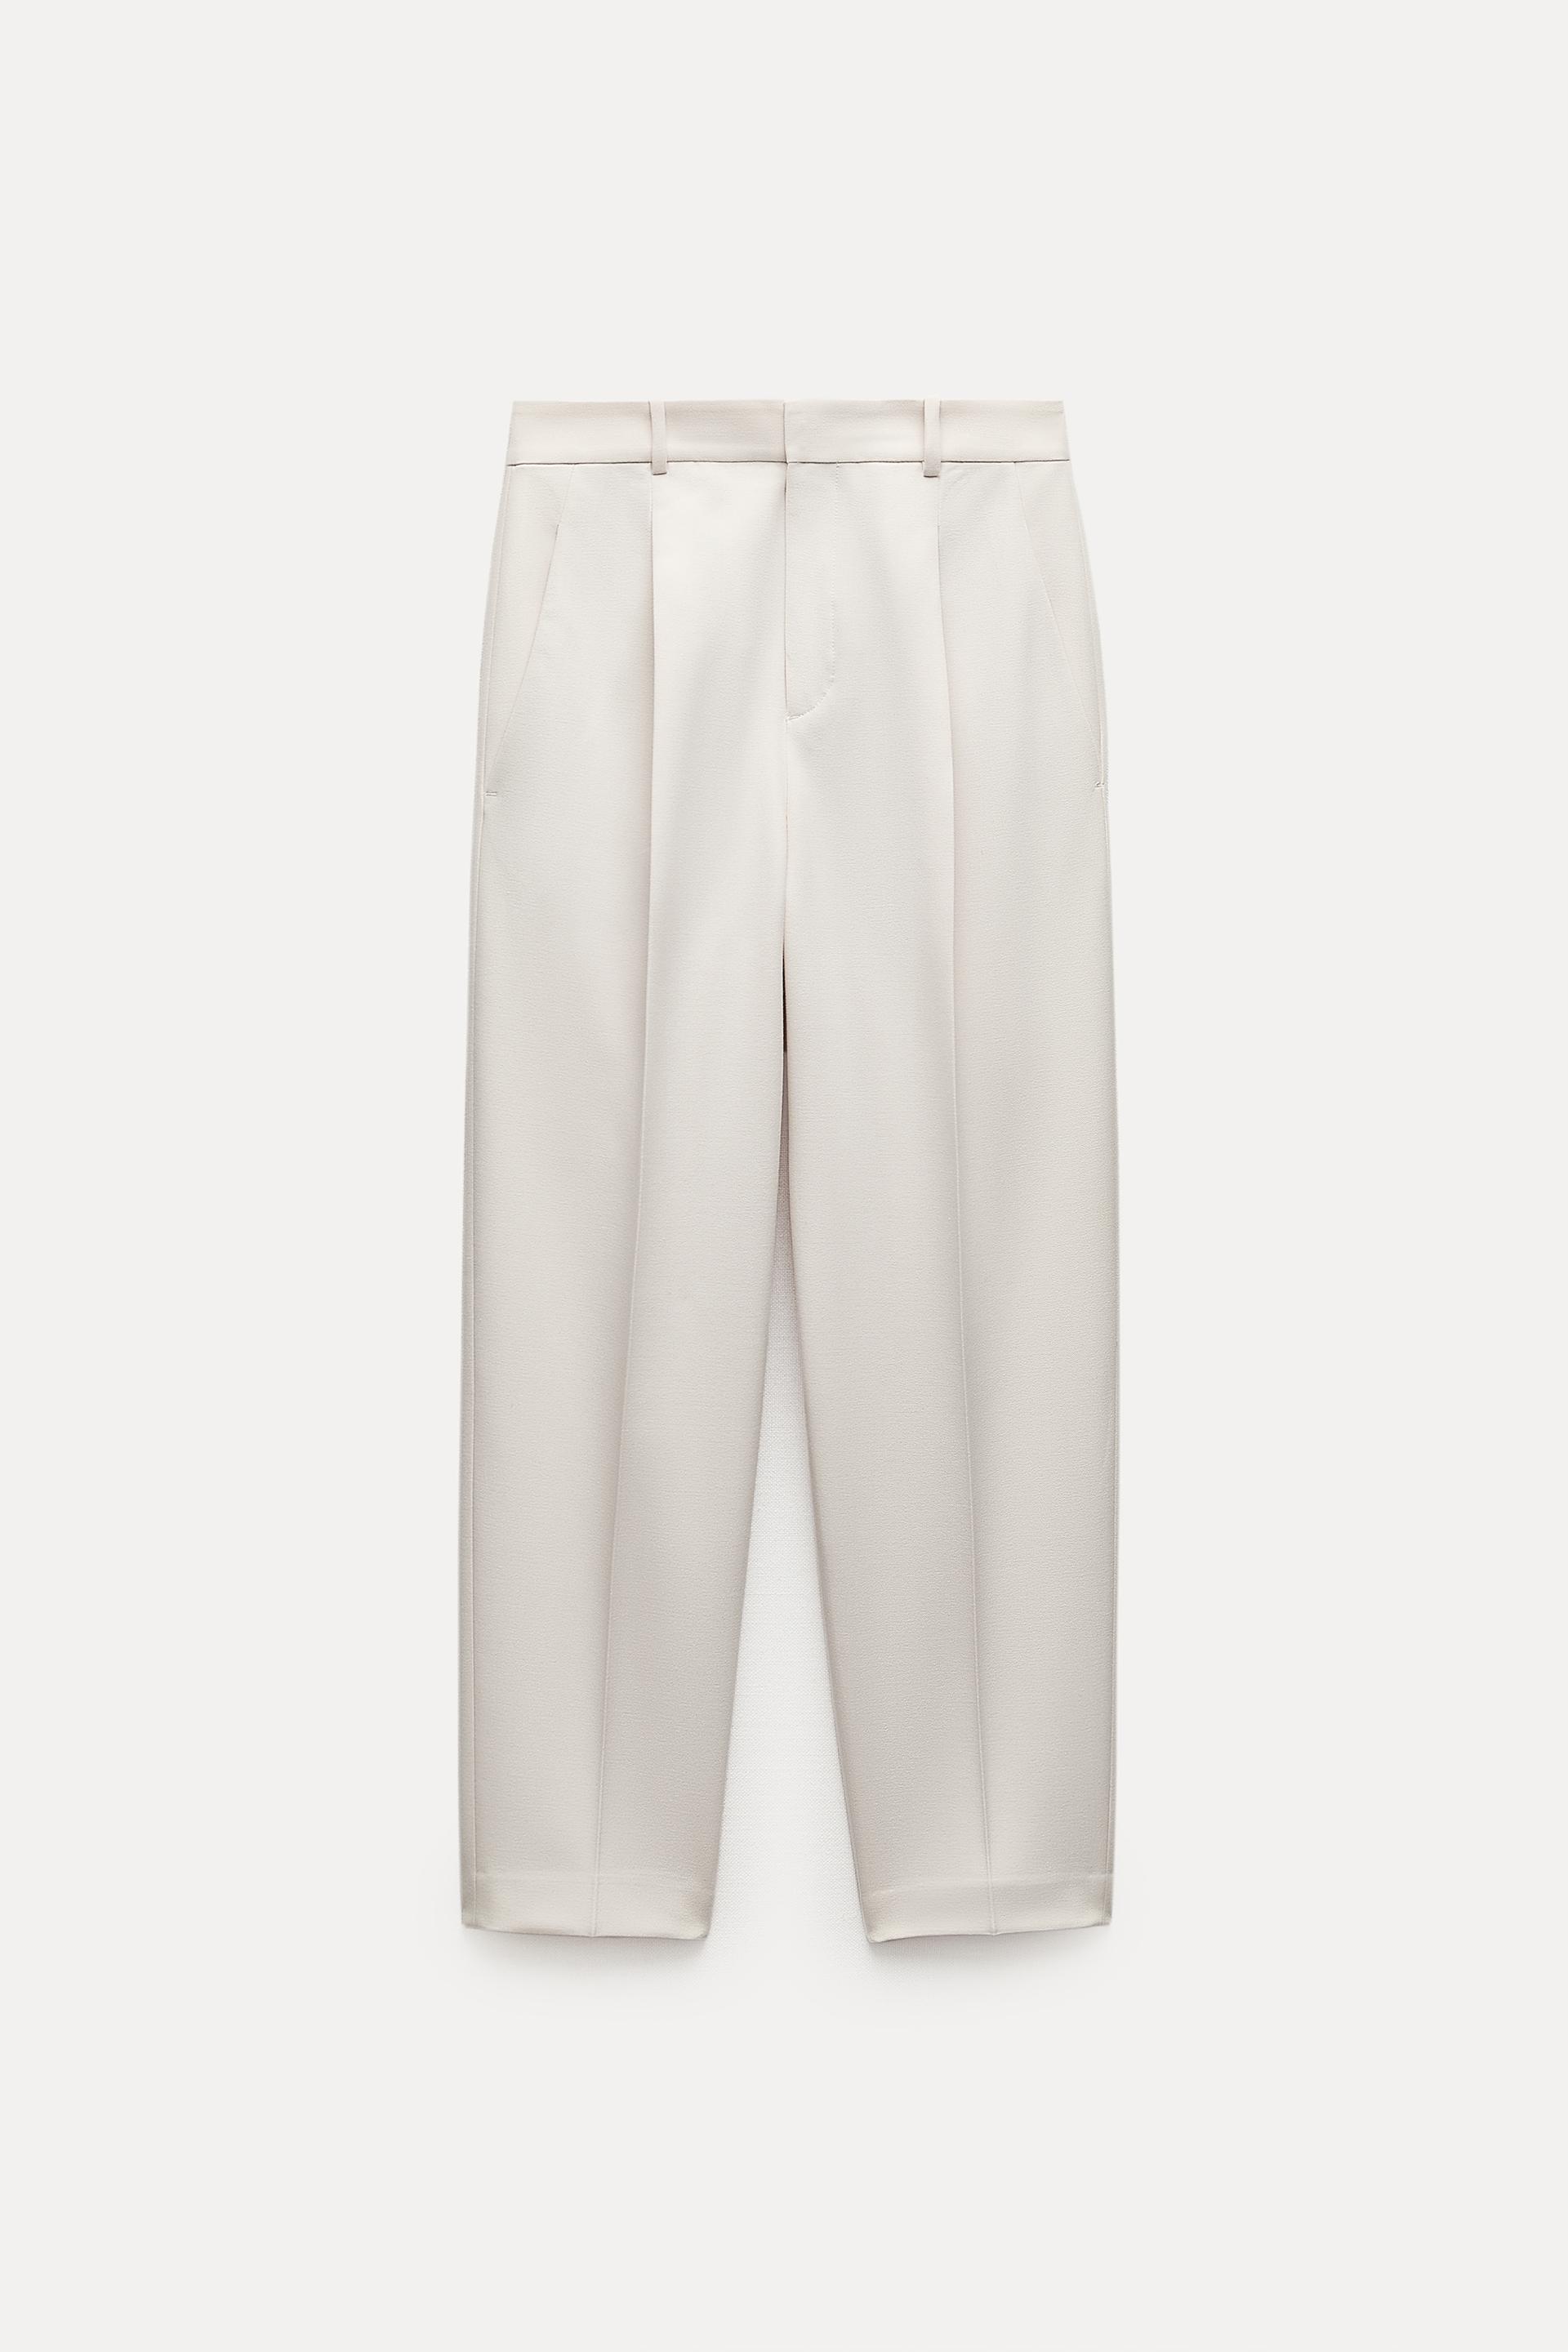 Zara, Pants & Jumpsuits, Zara High Waisted Trousers Pants With Darts  Blogger Fav